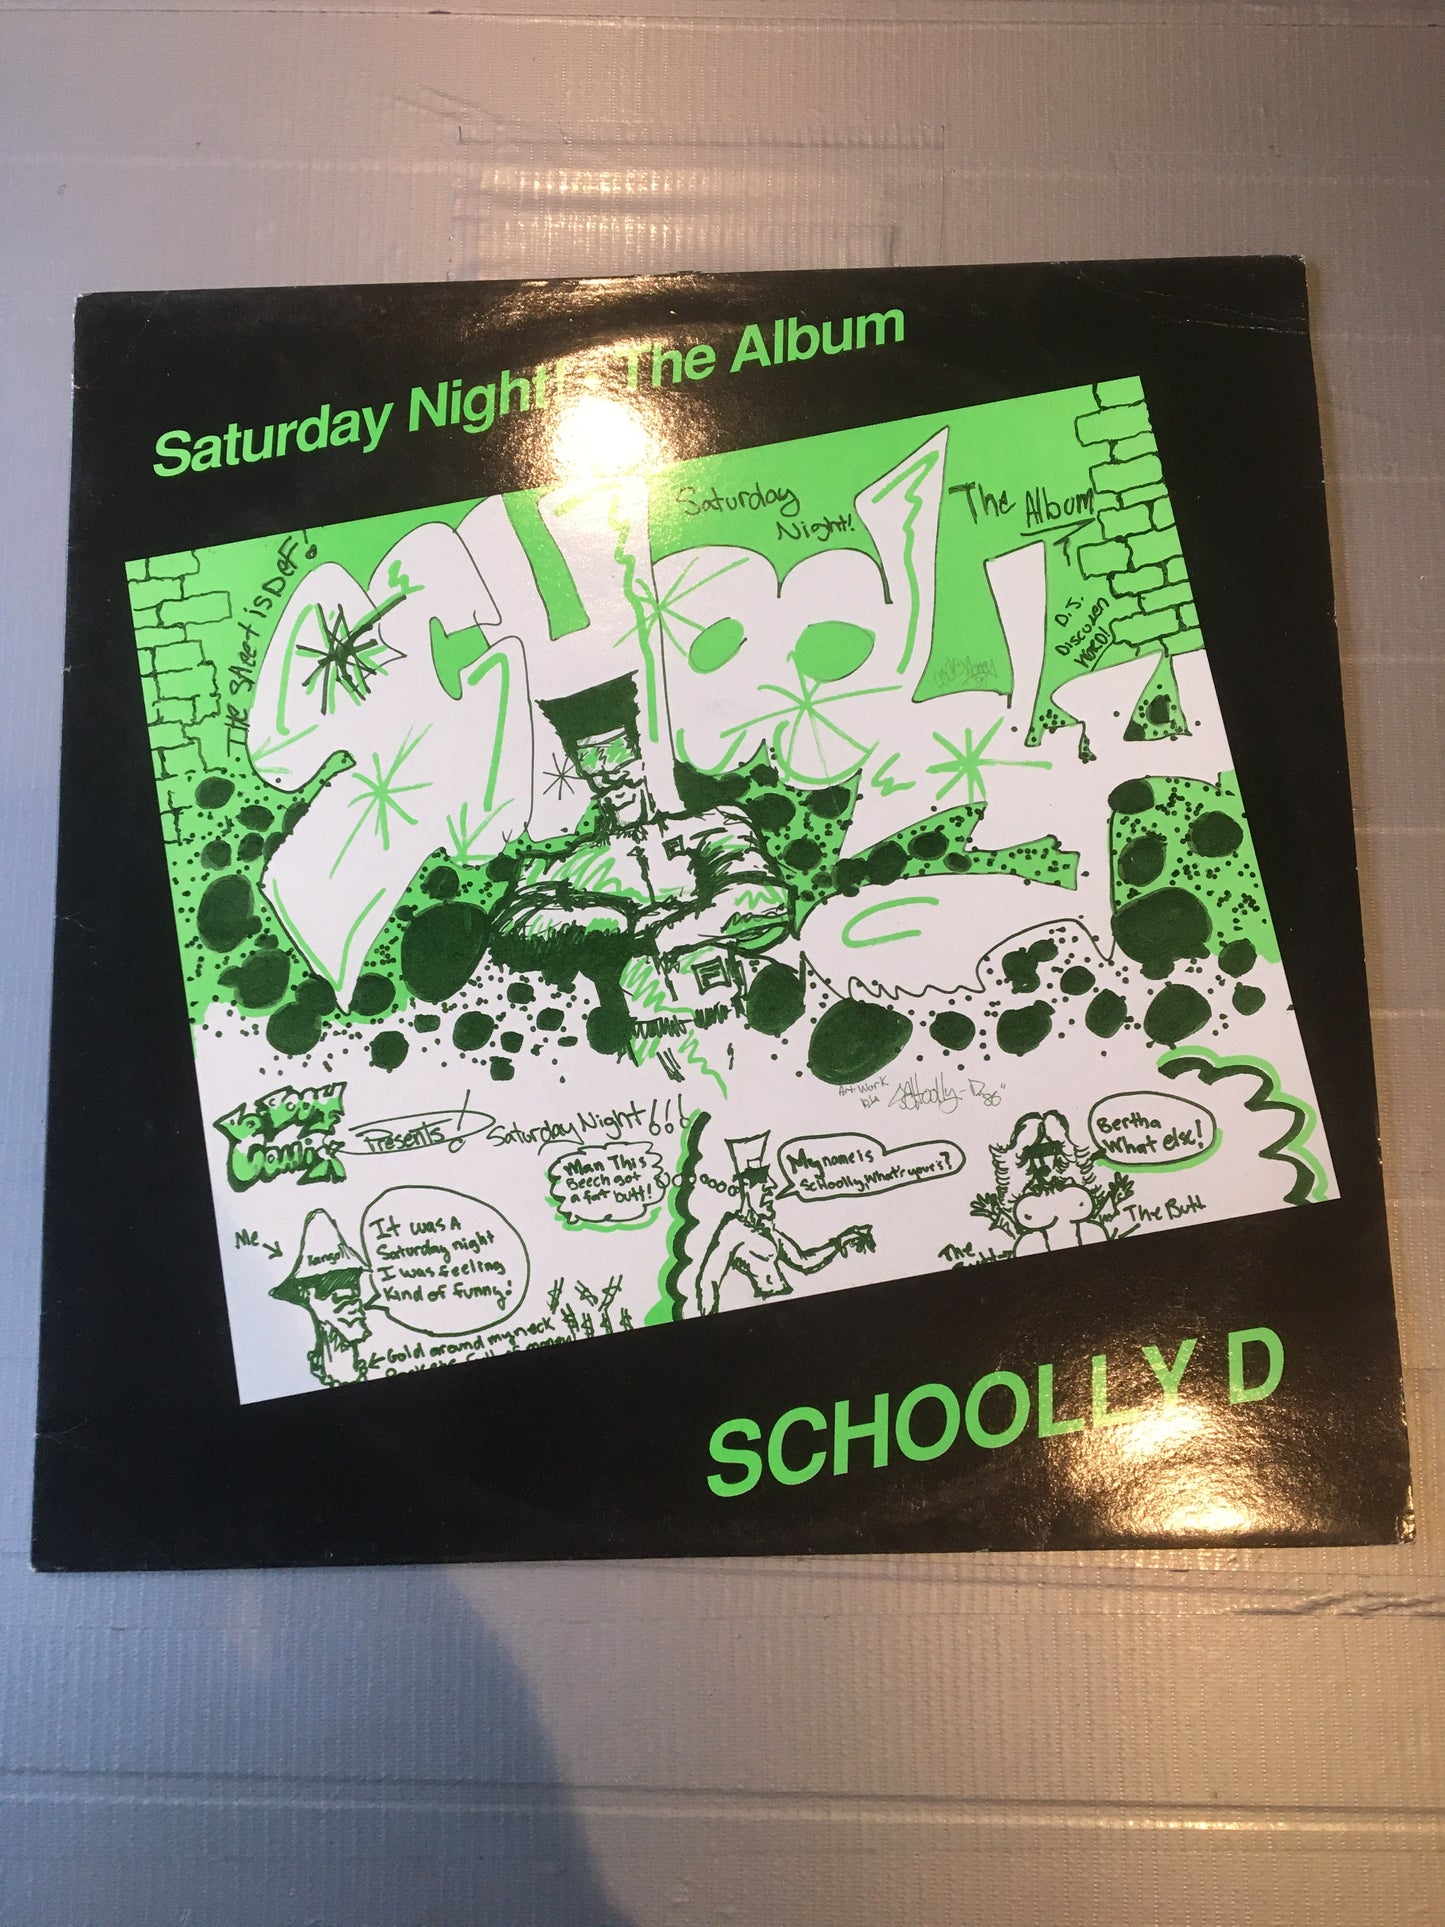 SCHOOLY D LP 1987 SATURDAY NIGHT